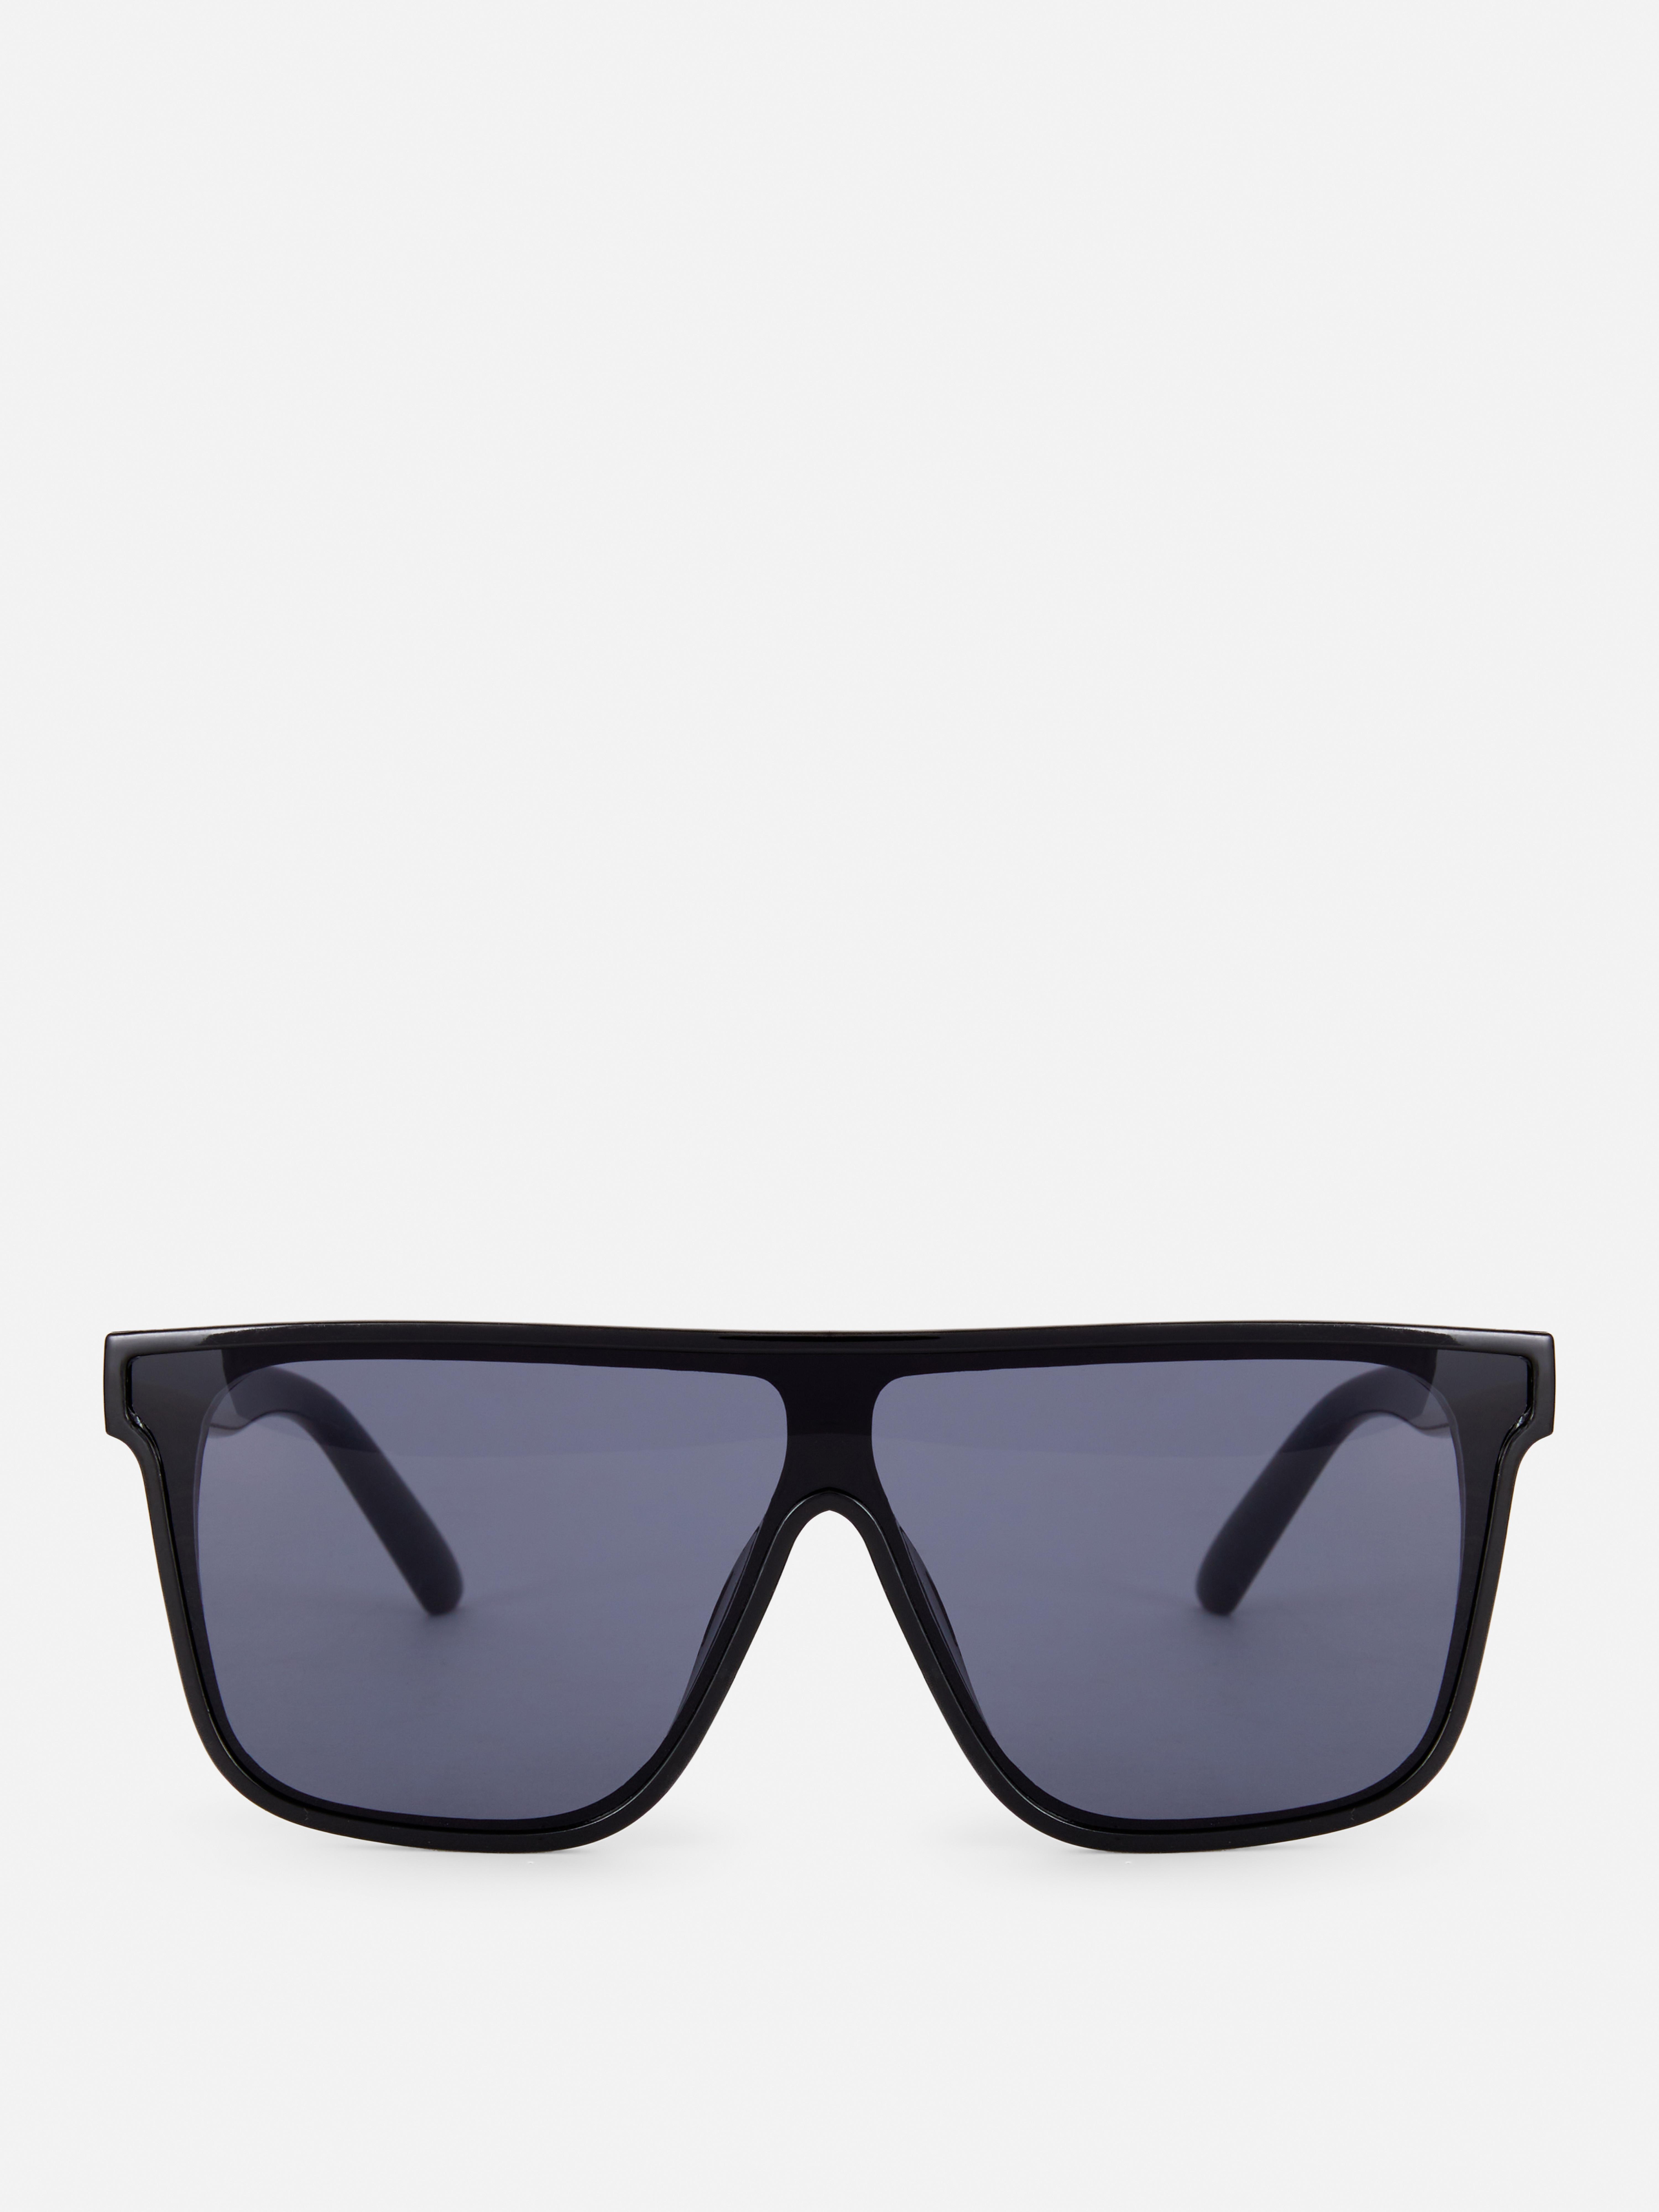 Sonnenbrille mit D-Rahmen